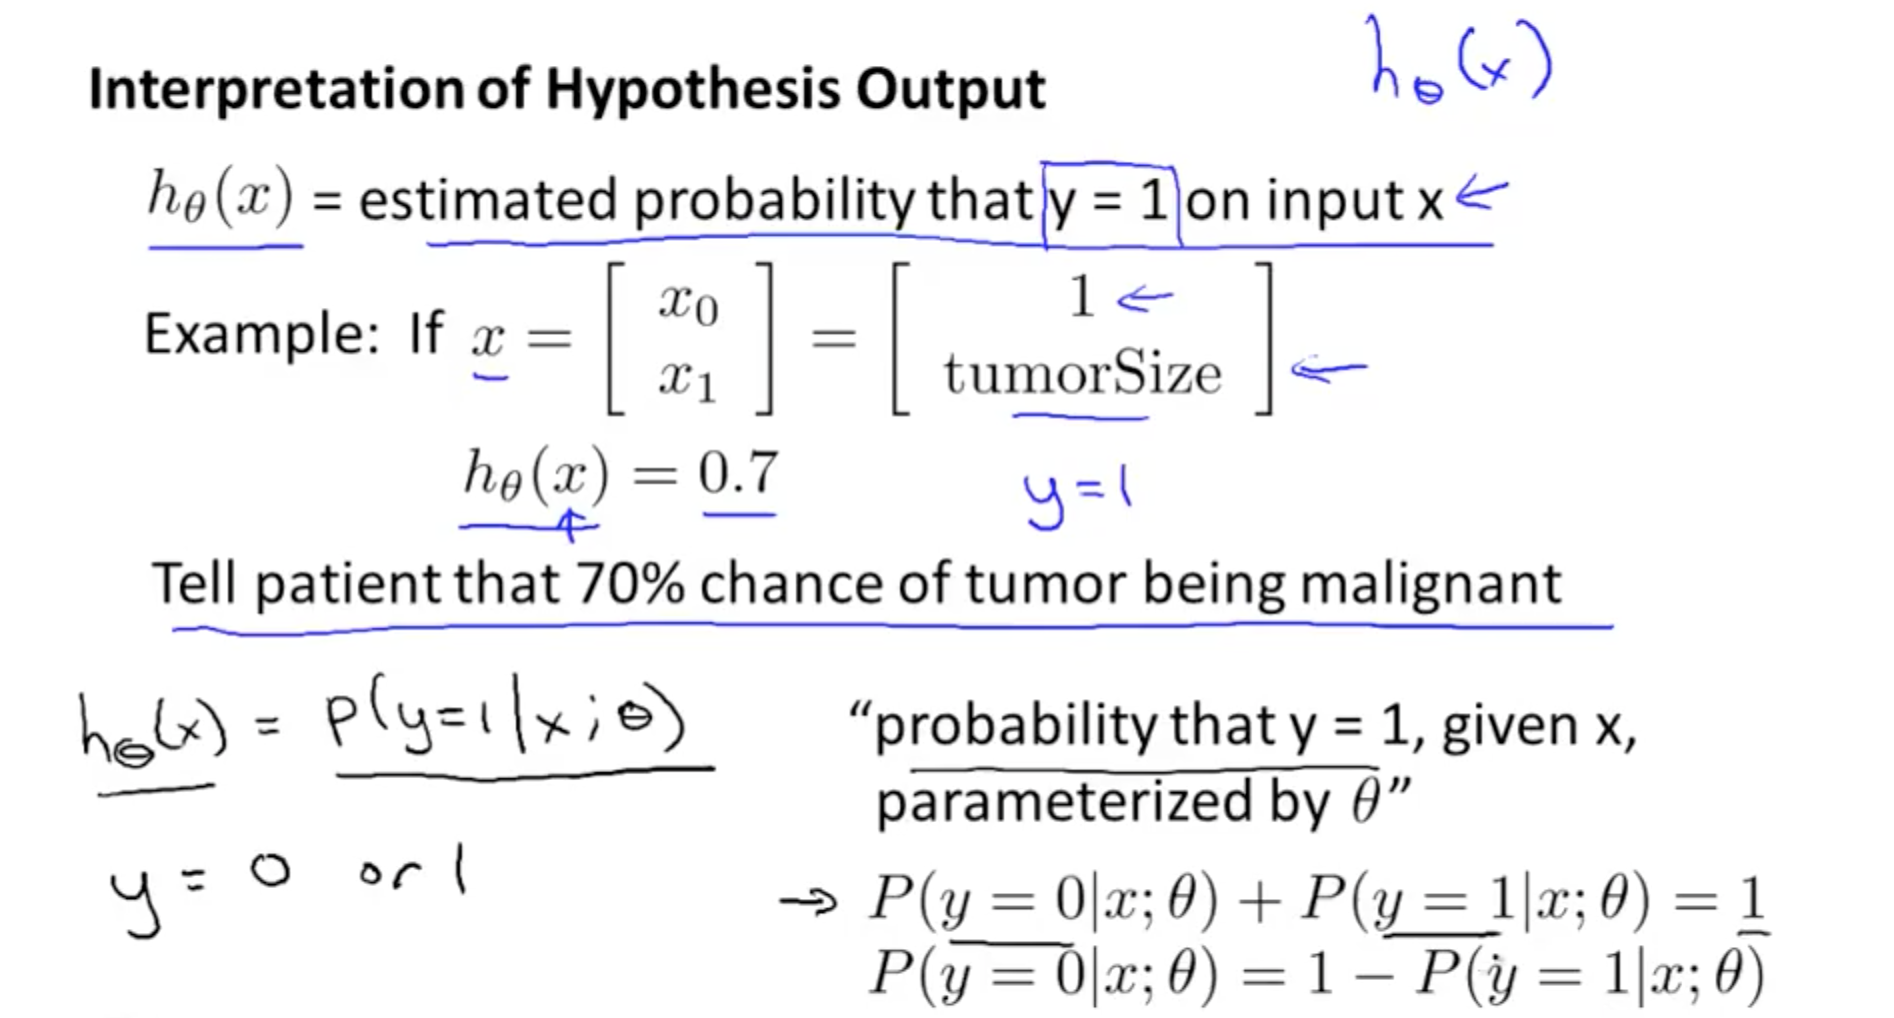 hypothesis logistic regression model